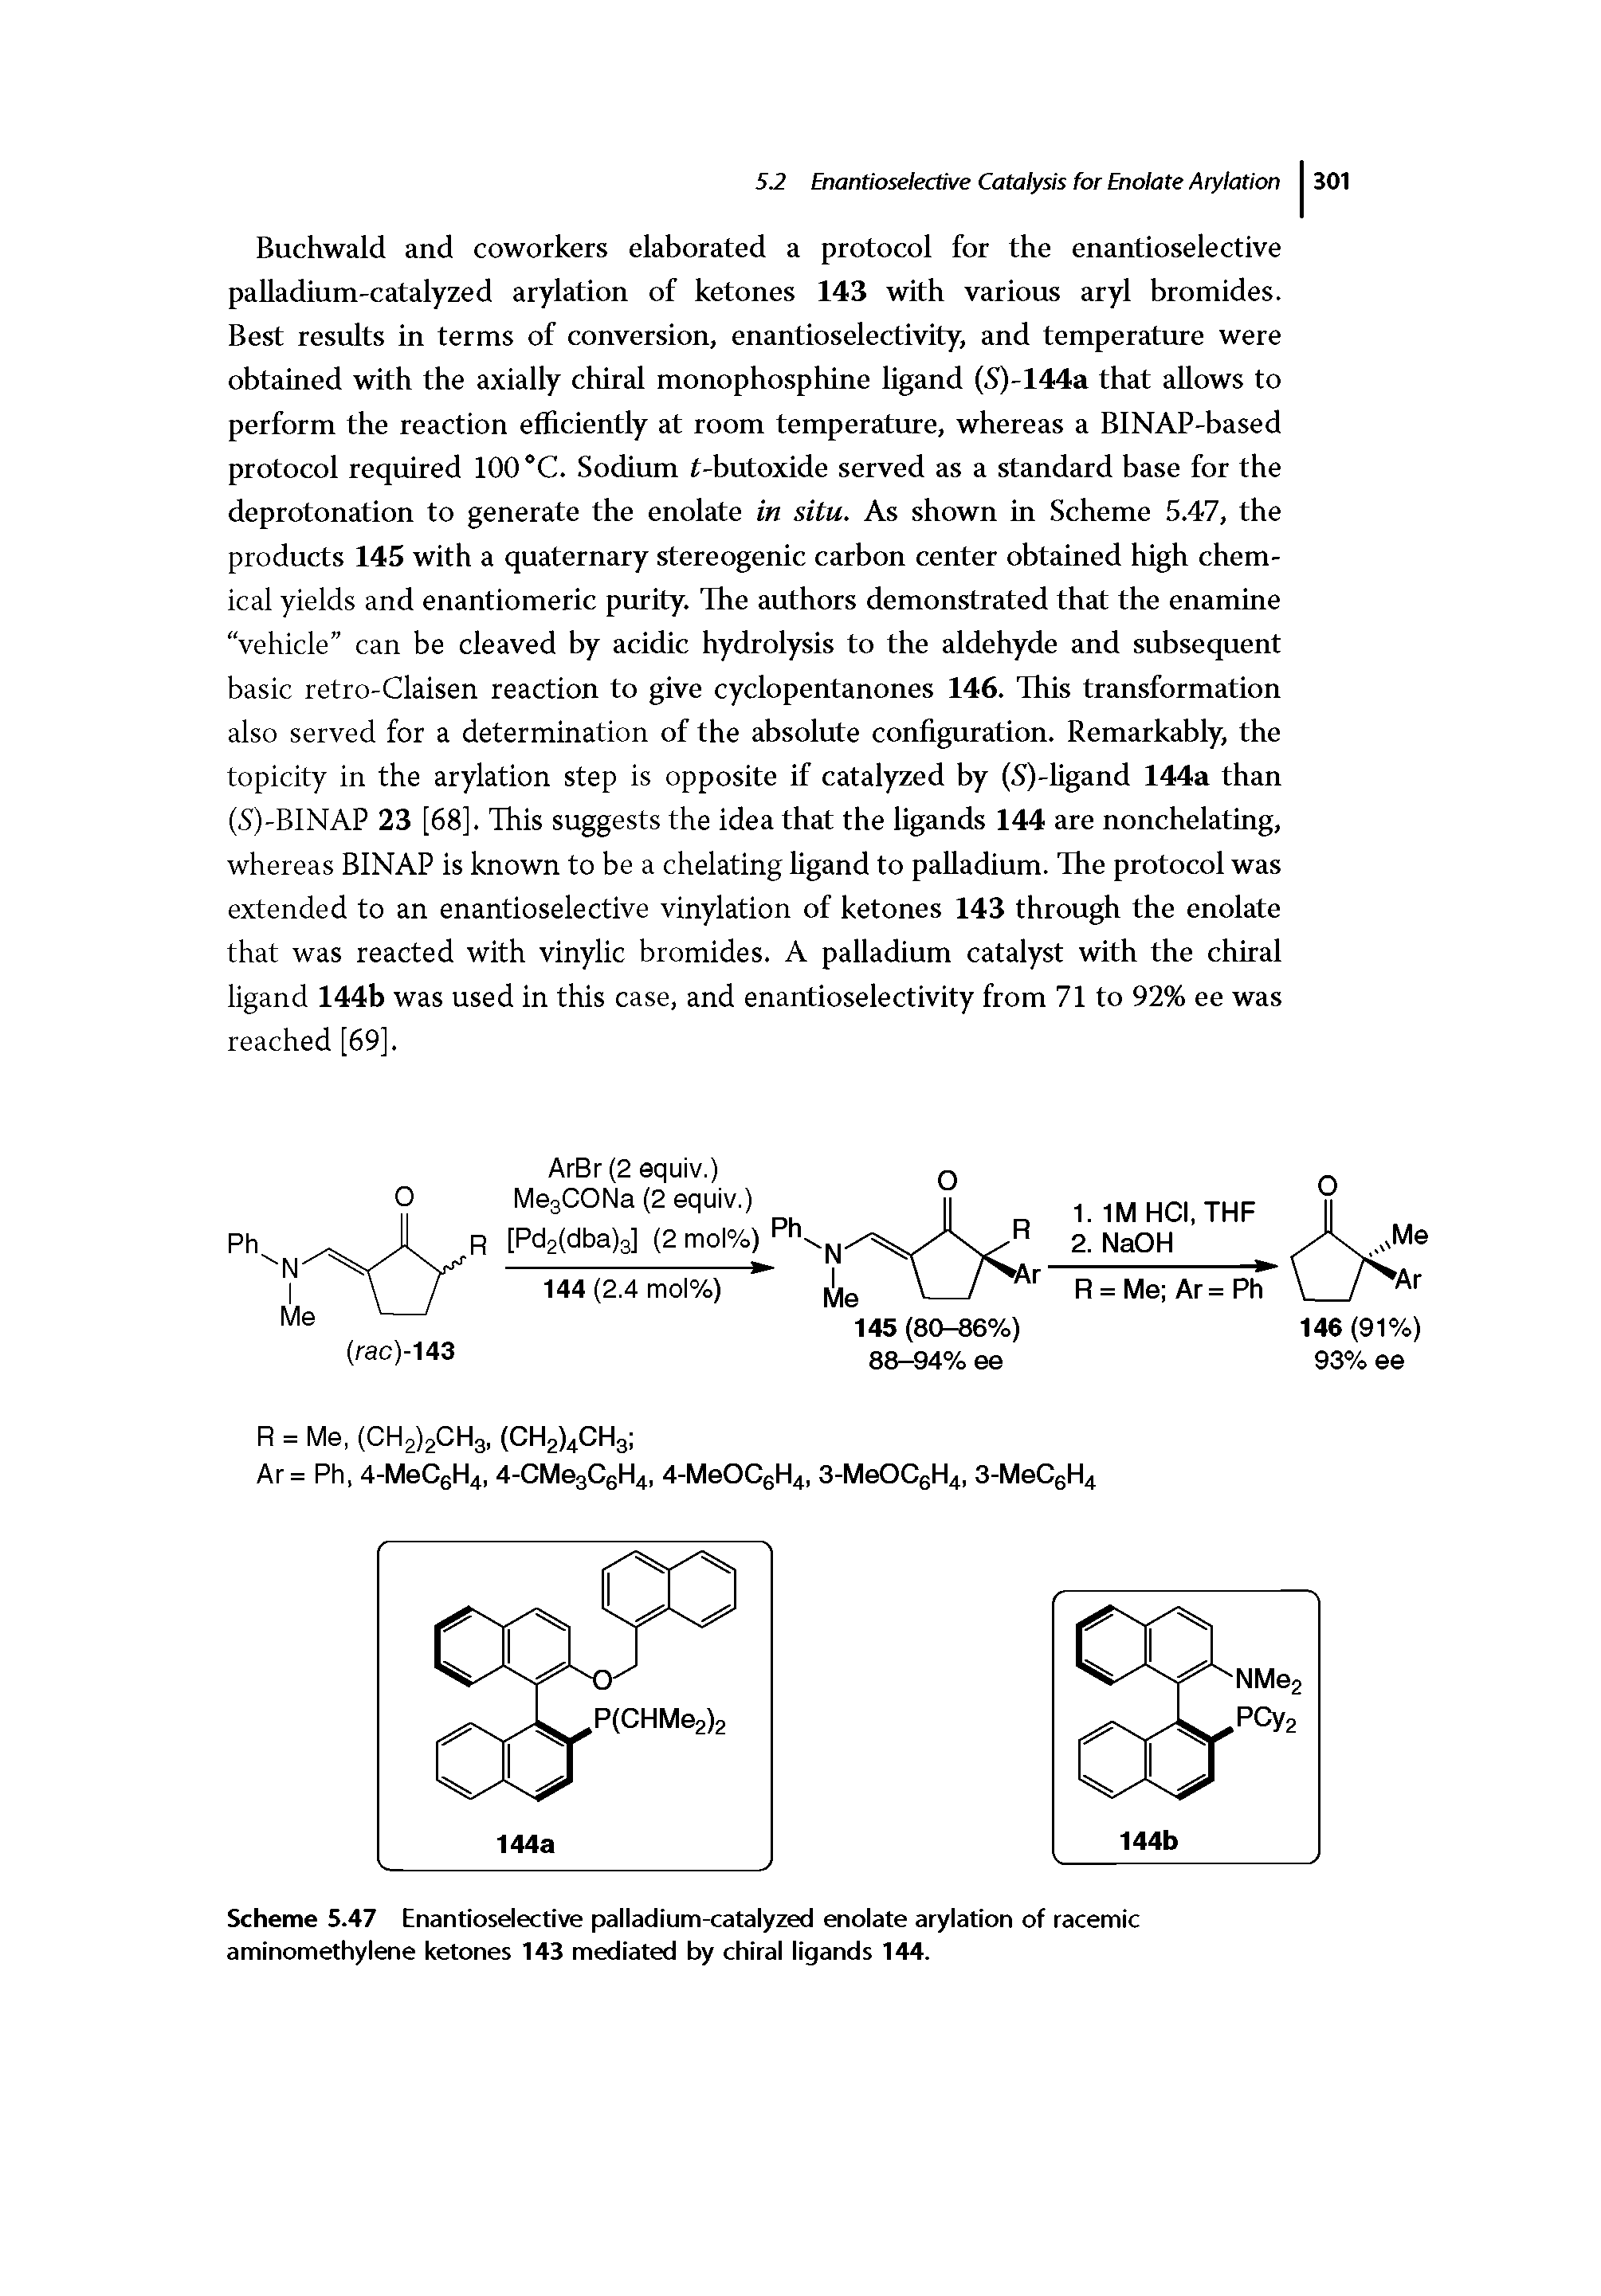 Scheme 5.47 Enantioselective palladium-catalyzed enolate arylation of racemic aminomethylene ketones 143 mediated by chiral ligands 144.